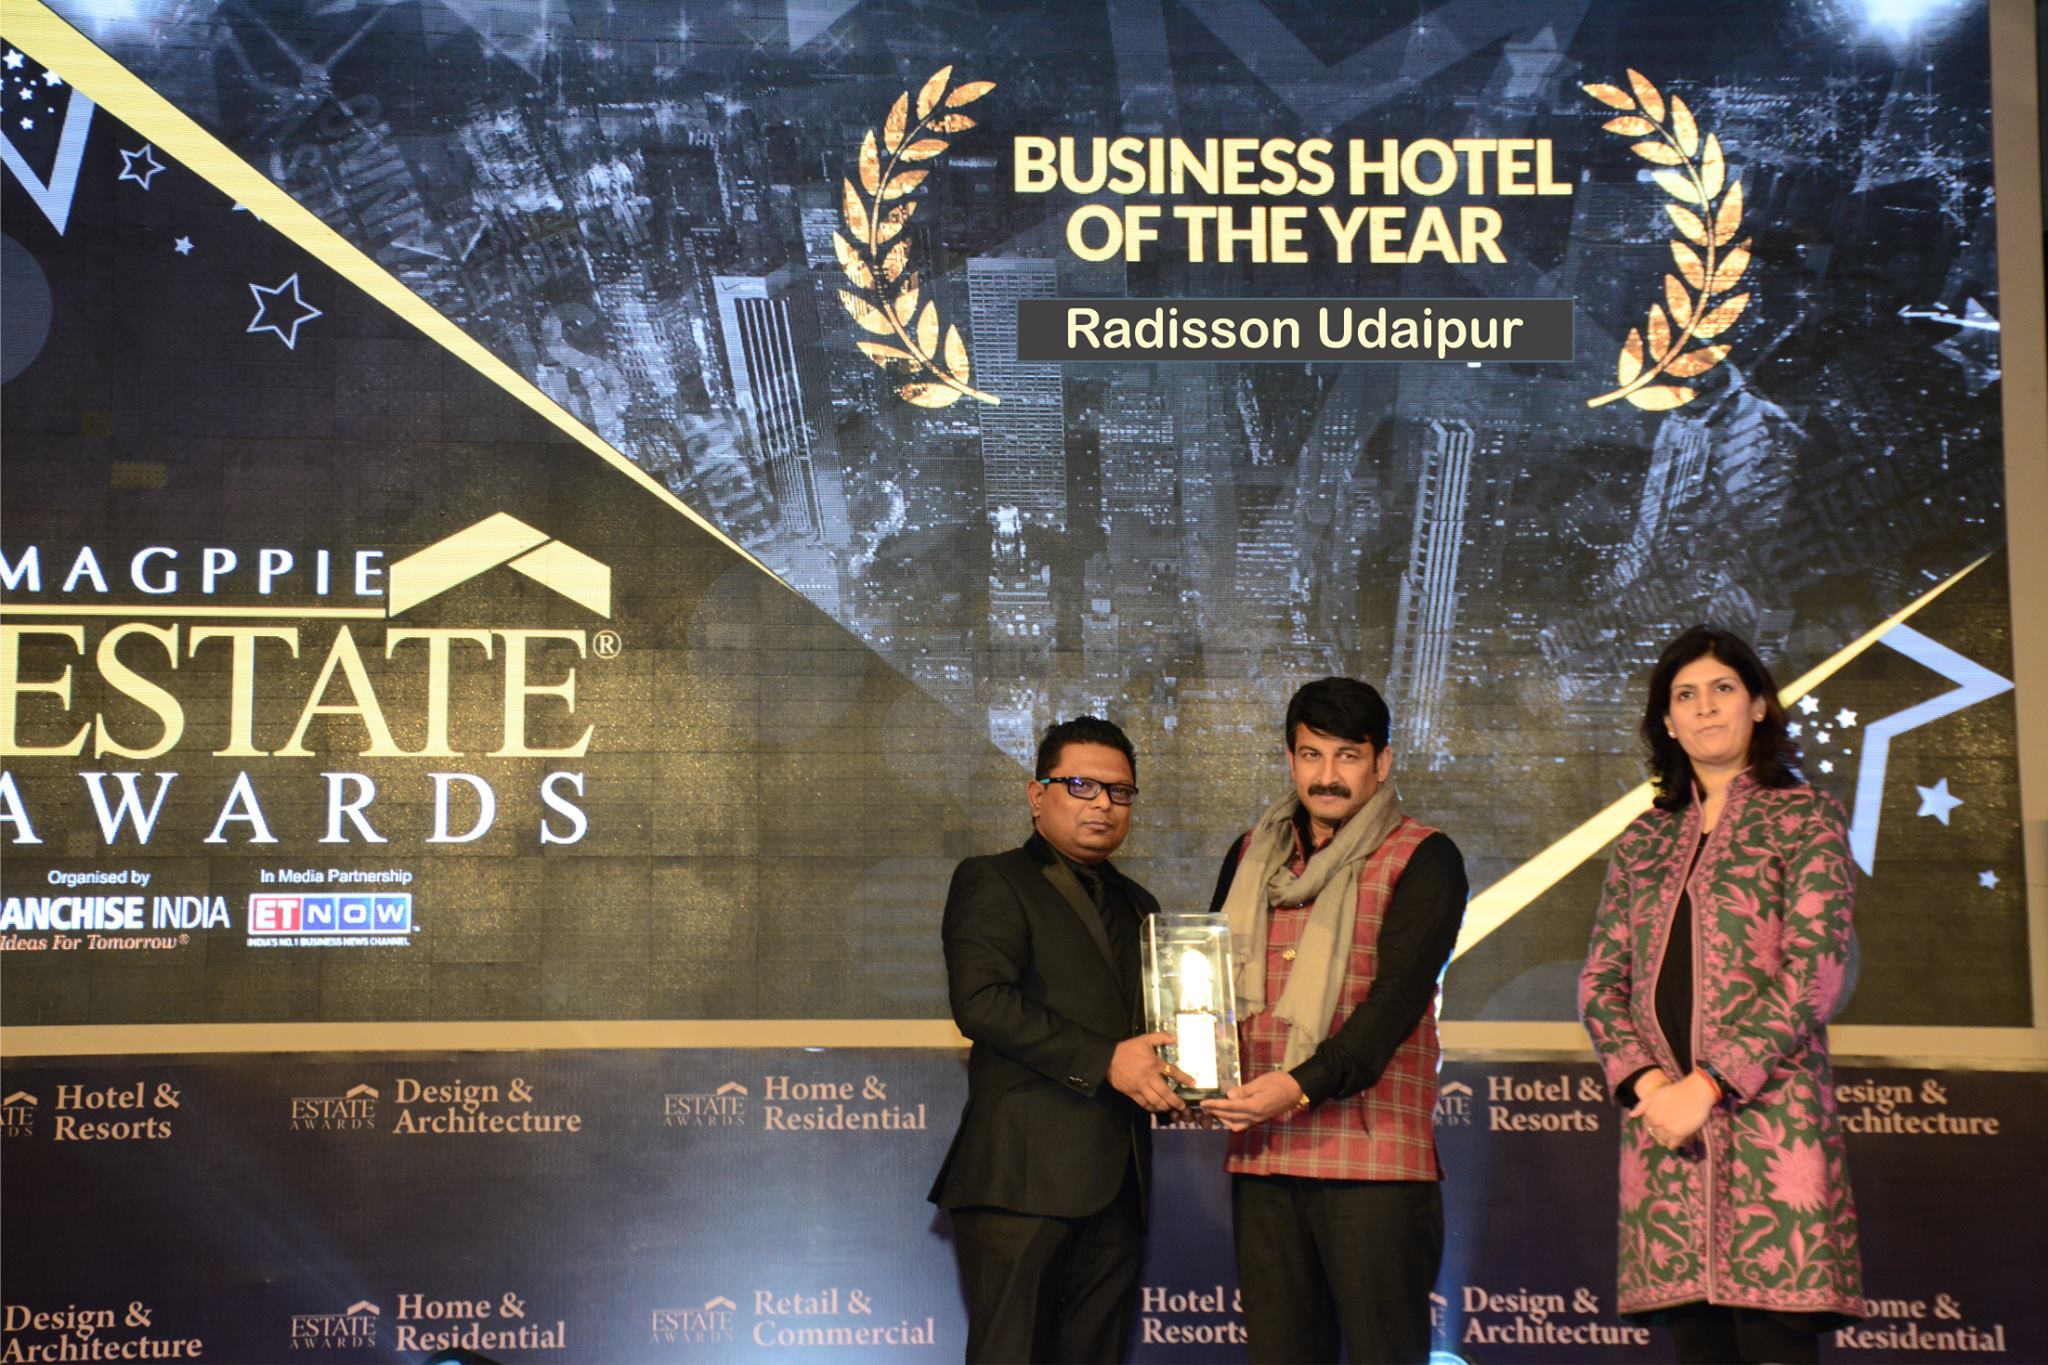 ‘Best Business Hotel Award 2016’ goes to Radisson Udaipur